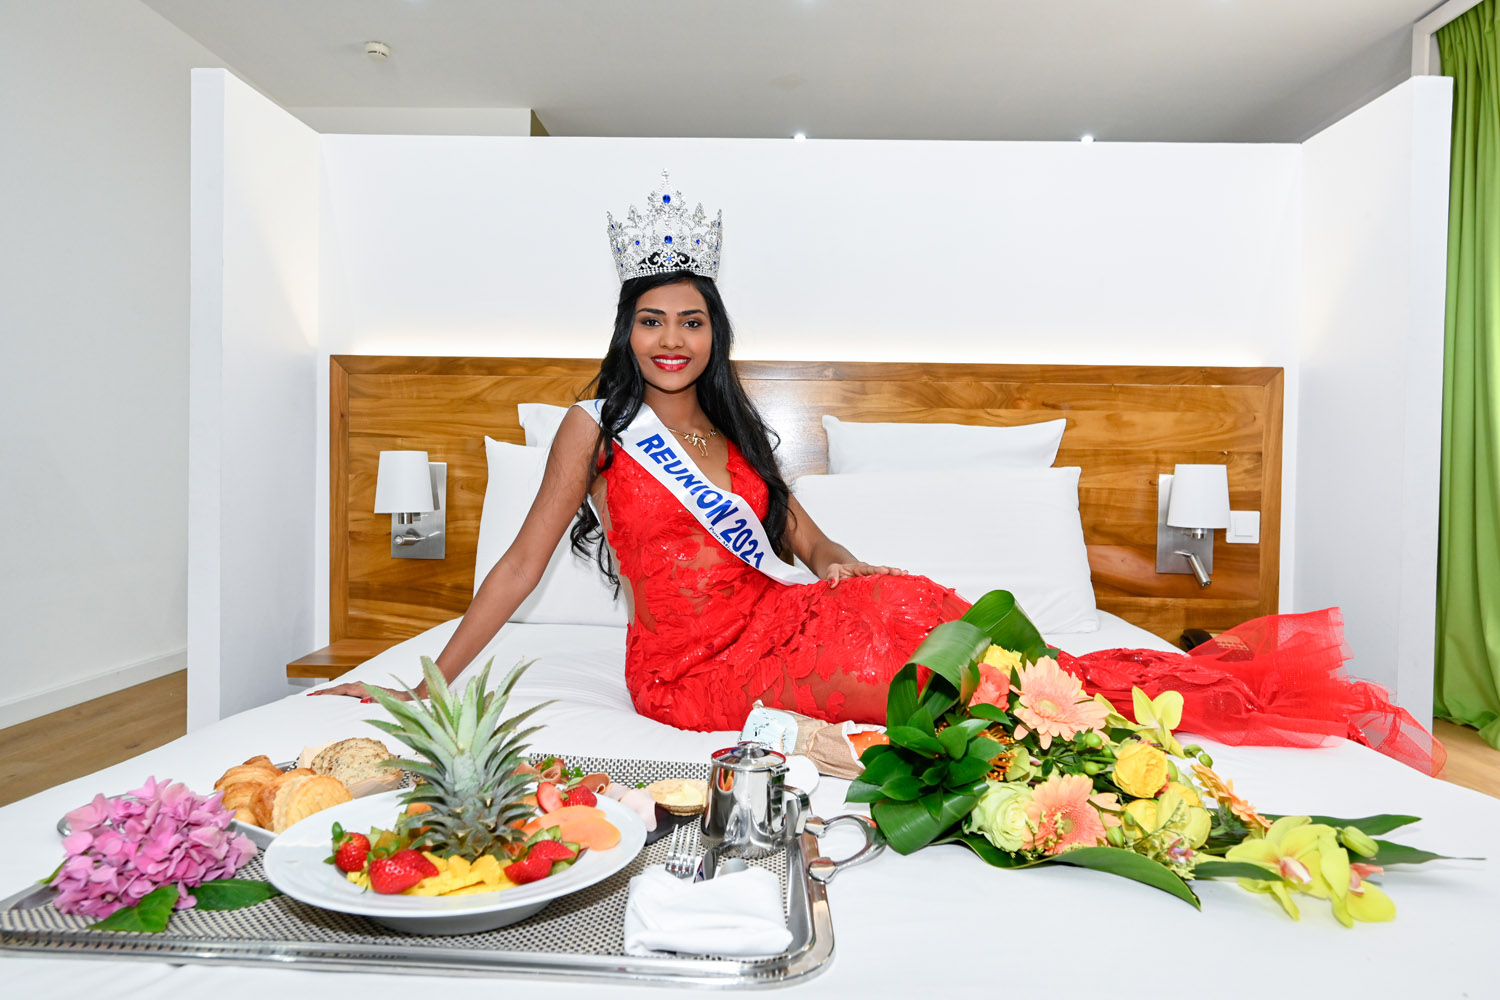 Le réveil de Dana Virin, Miss Réunion 2021